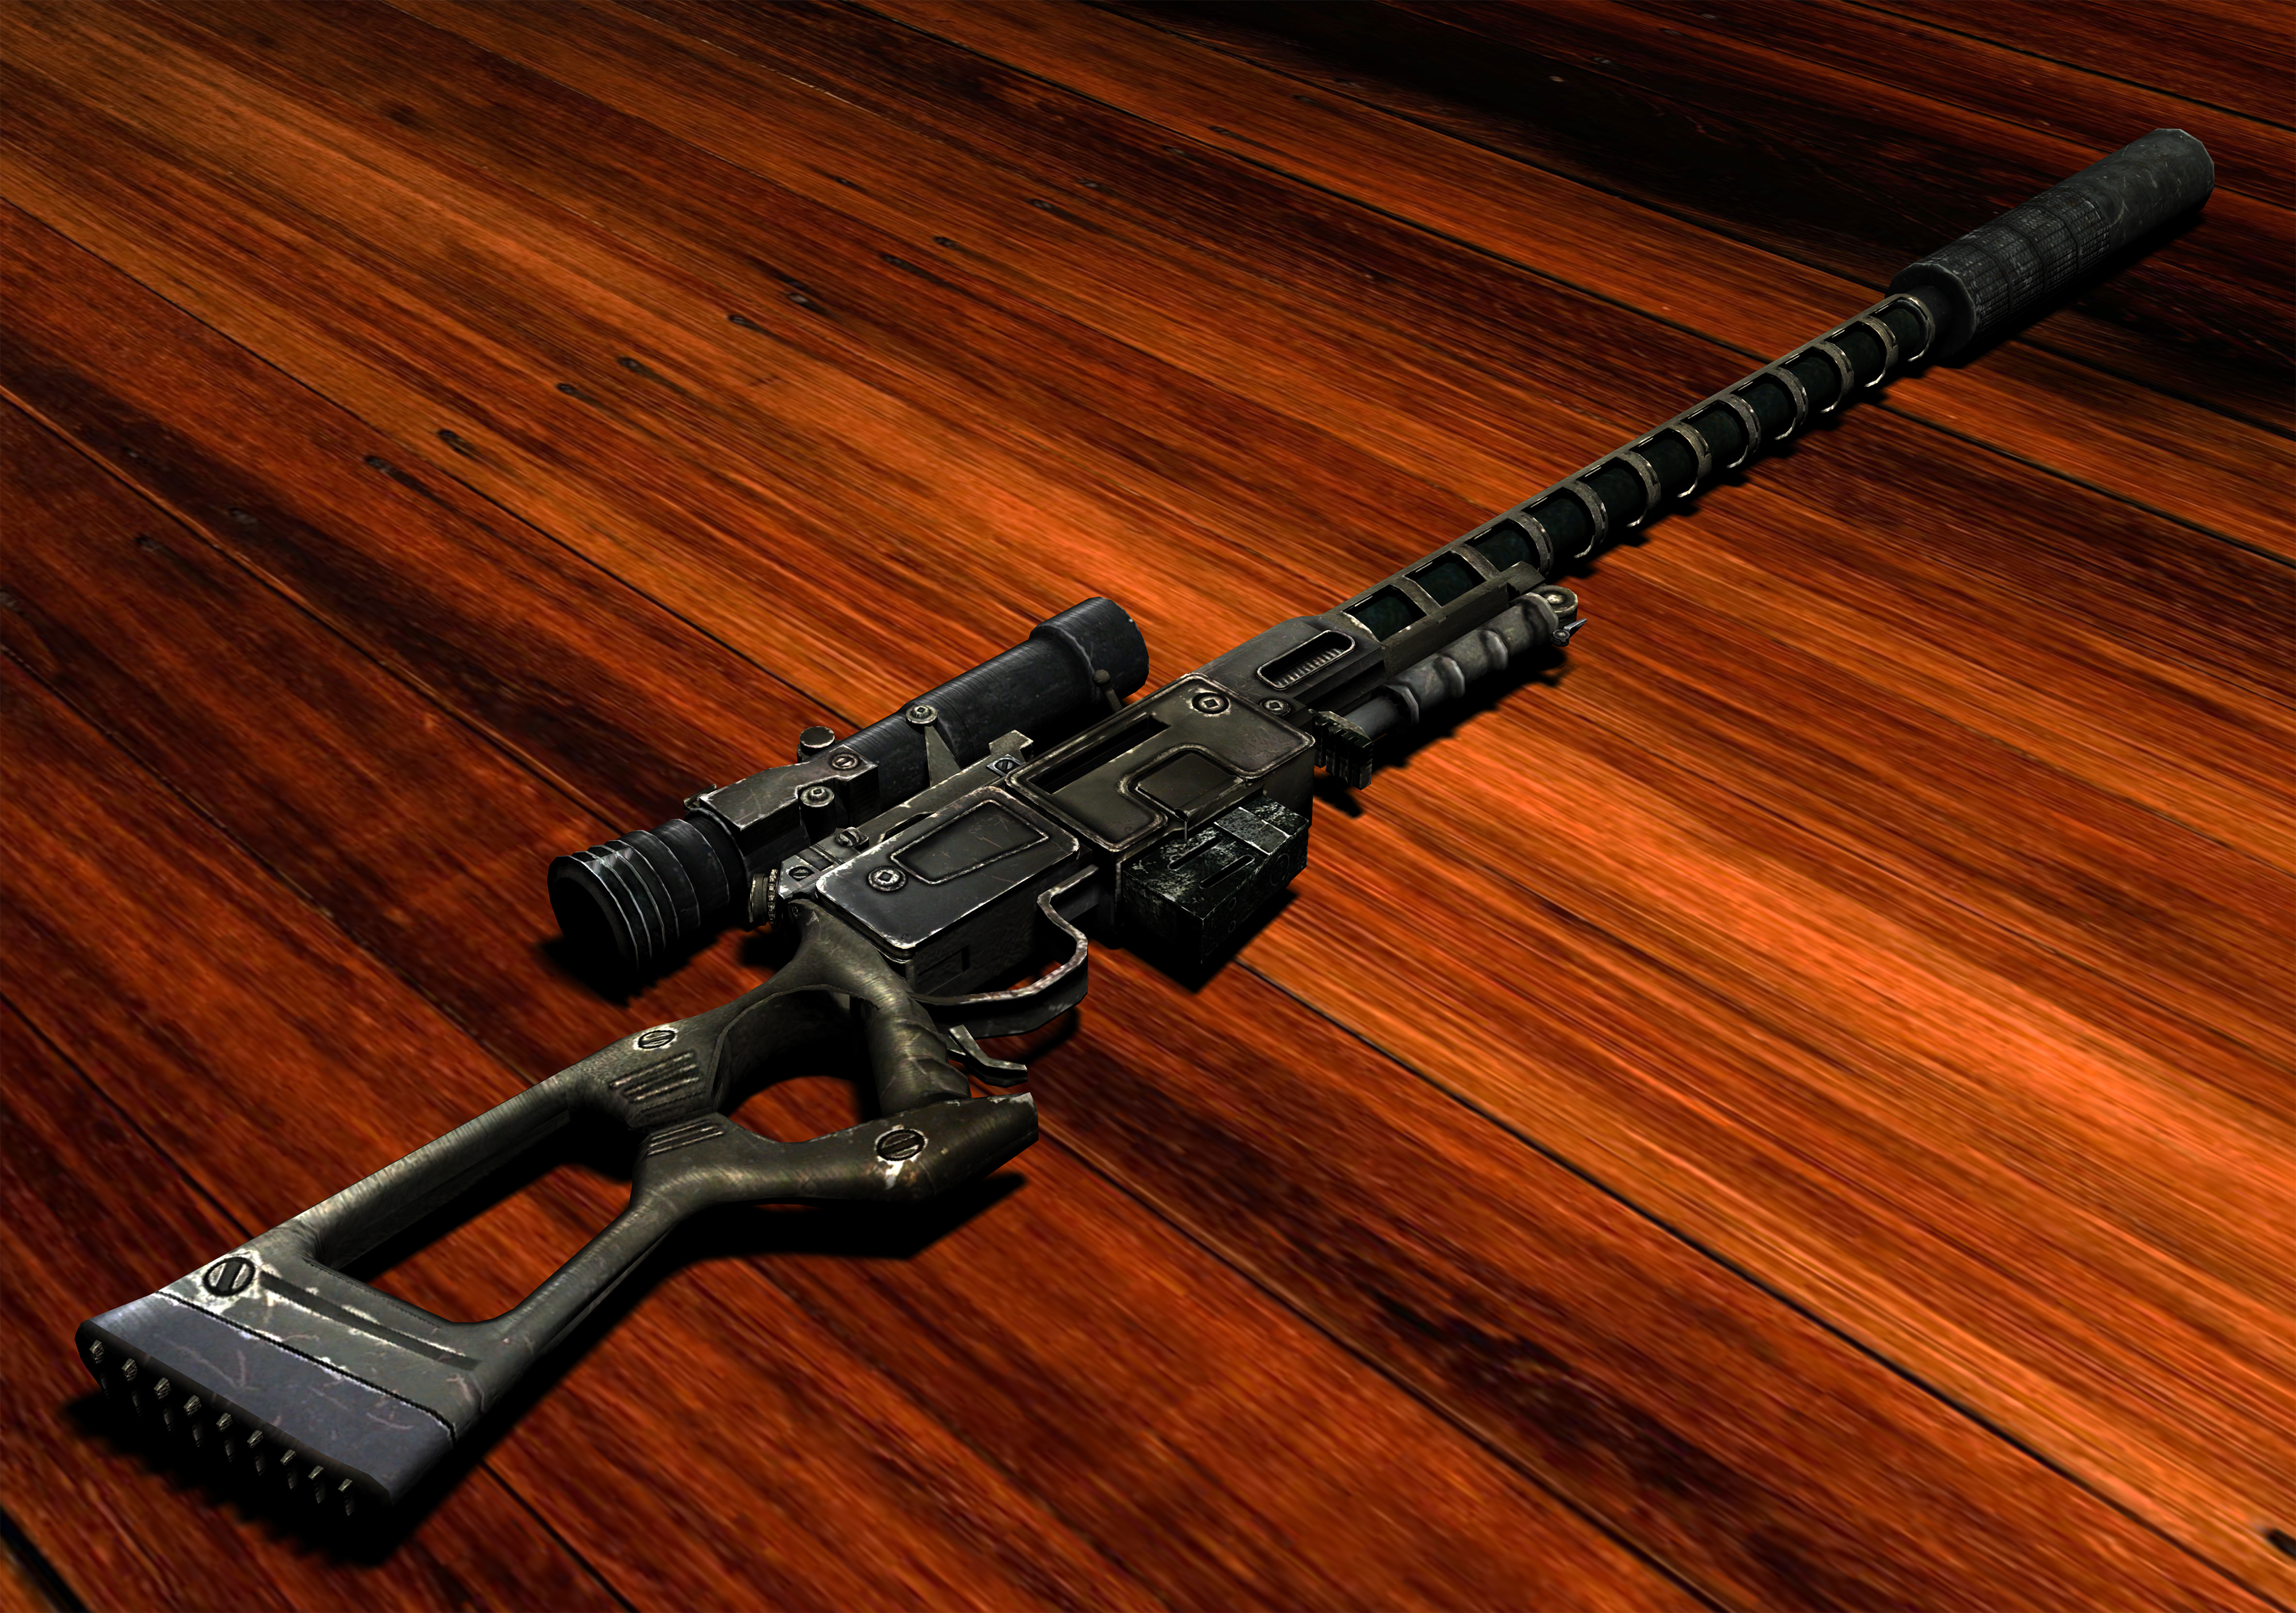 Sniper_rifle_02.jpg